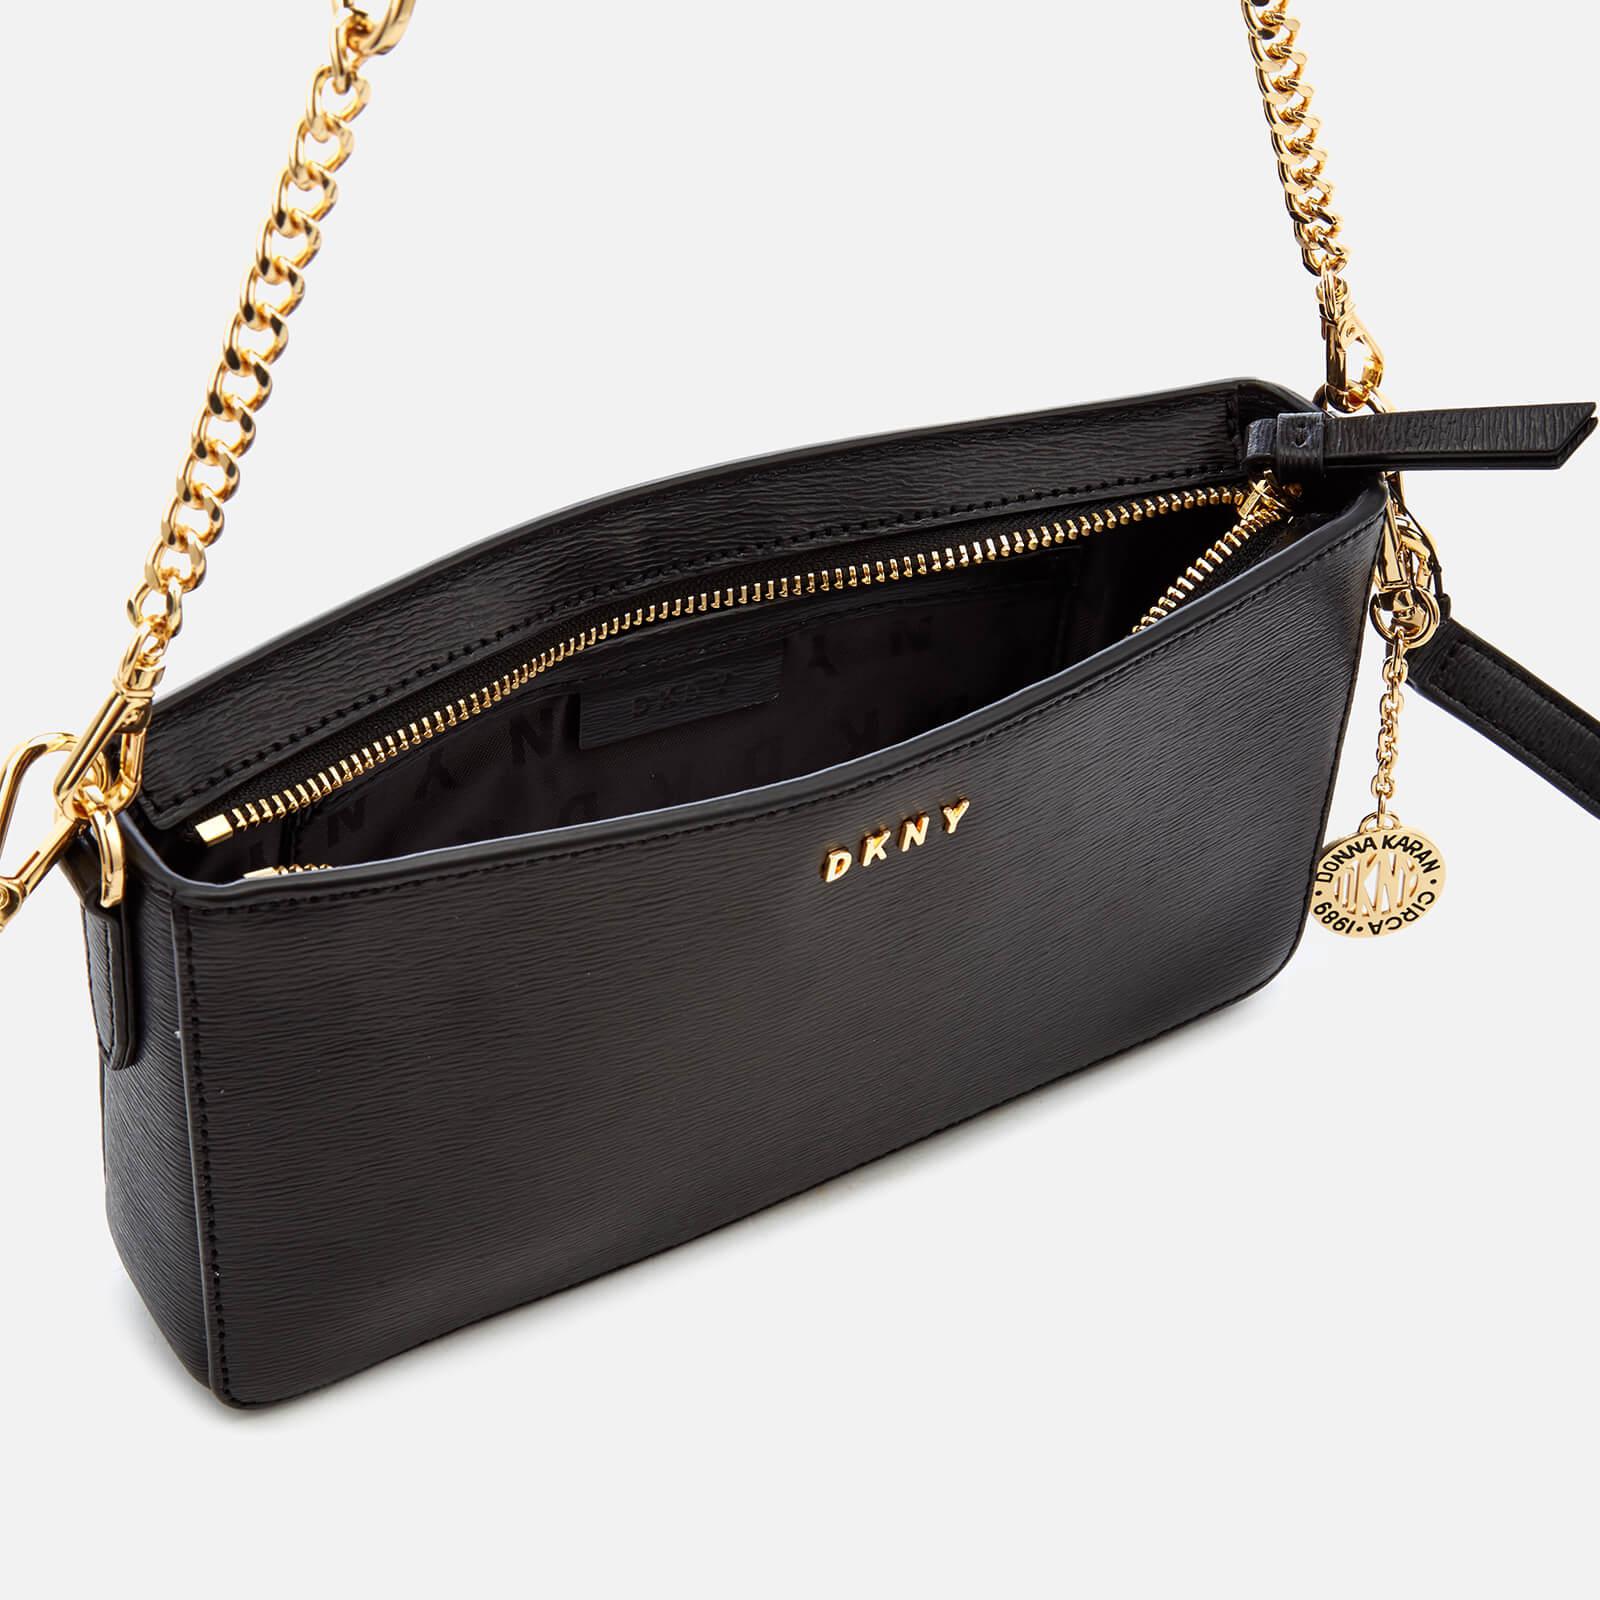 DKNY Leather Bryant Small Demi Cross Body Bag in Black - Lyst